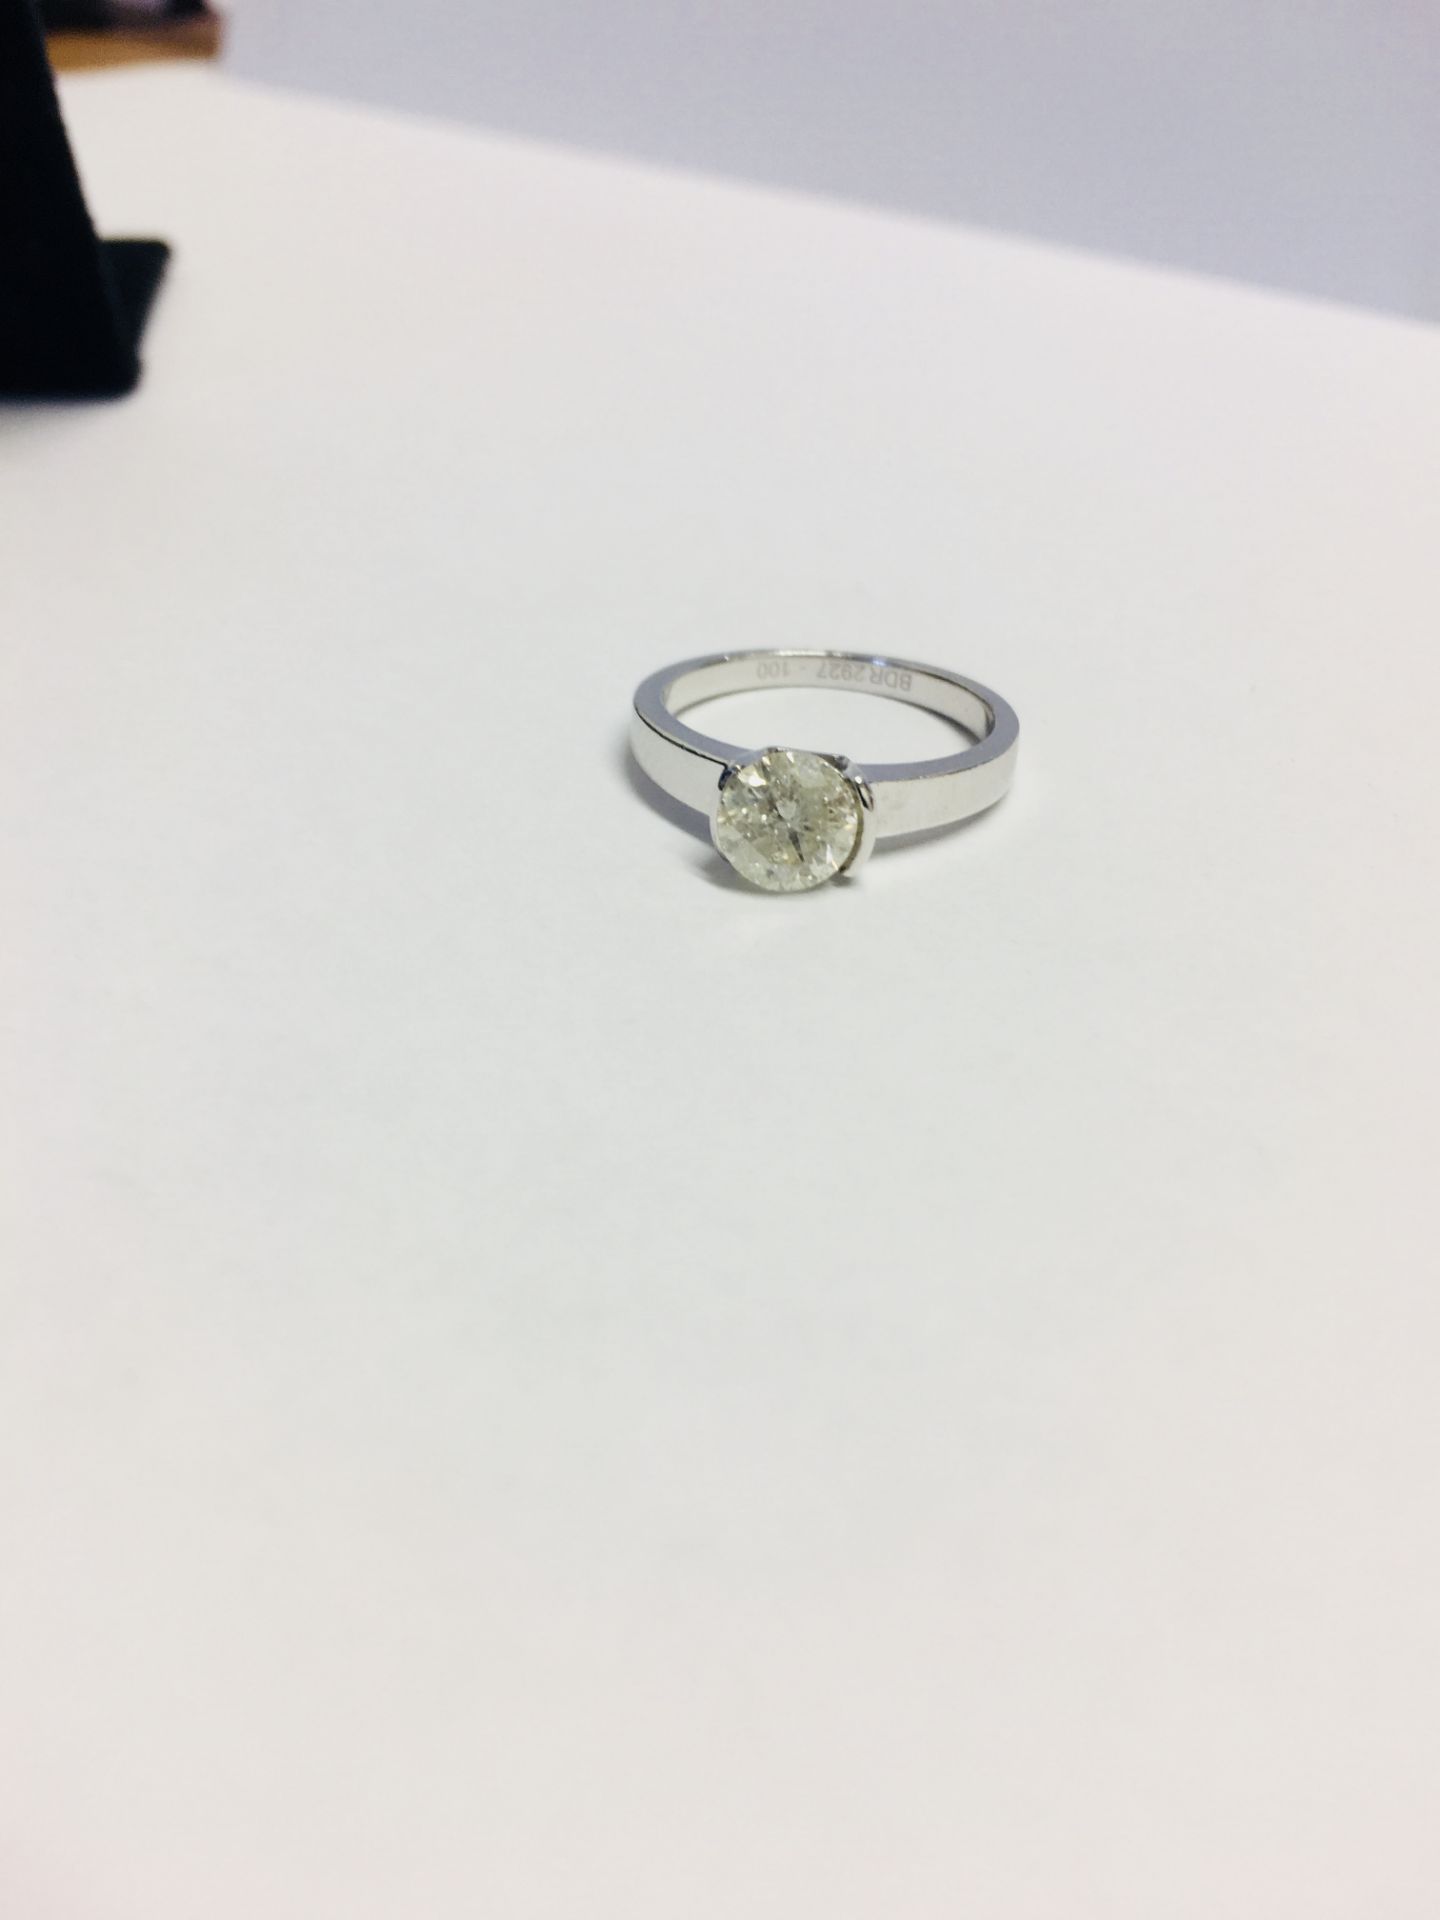 1ct brilliant cut diamond solitaire ring,diamond is L colour i2 clarity,platinum mount uk London